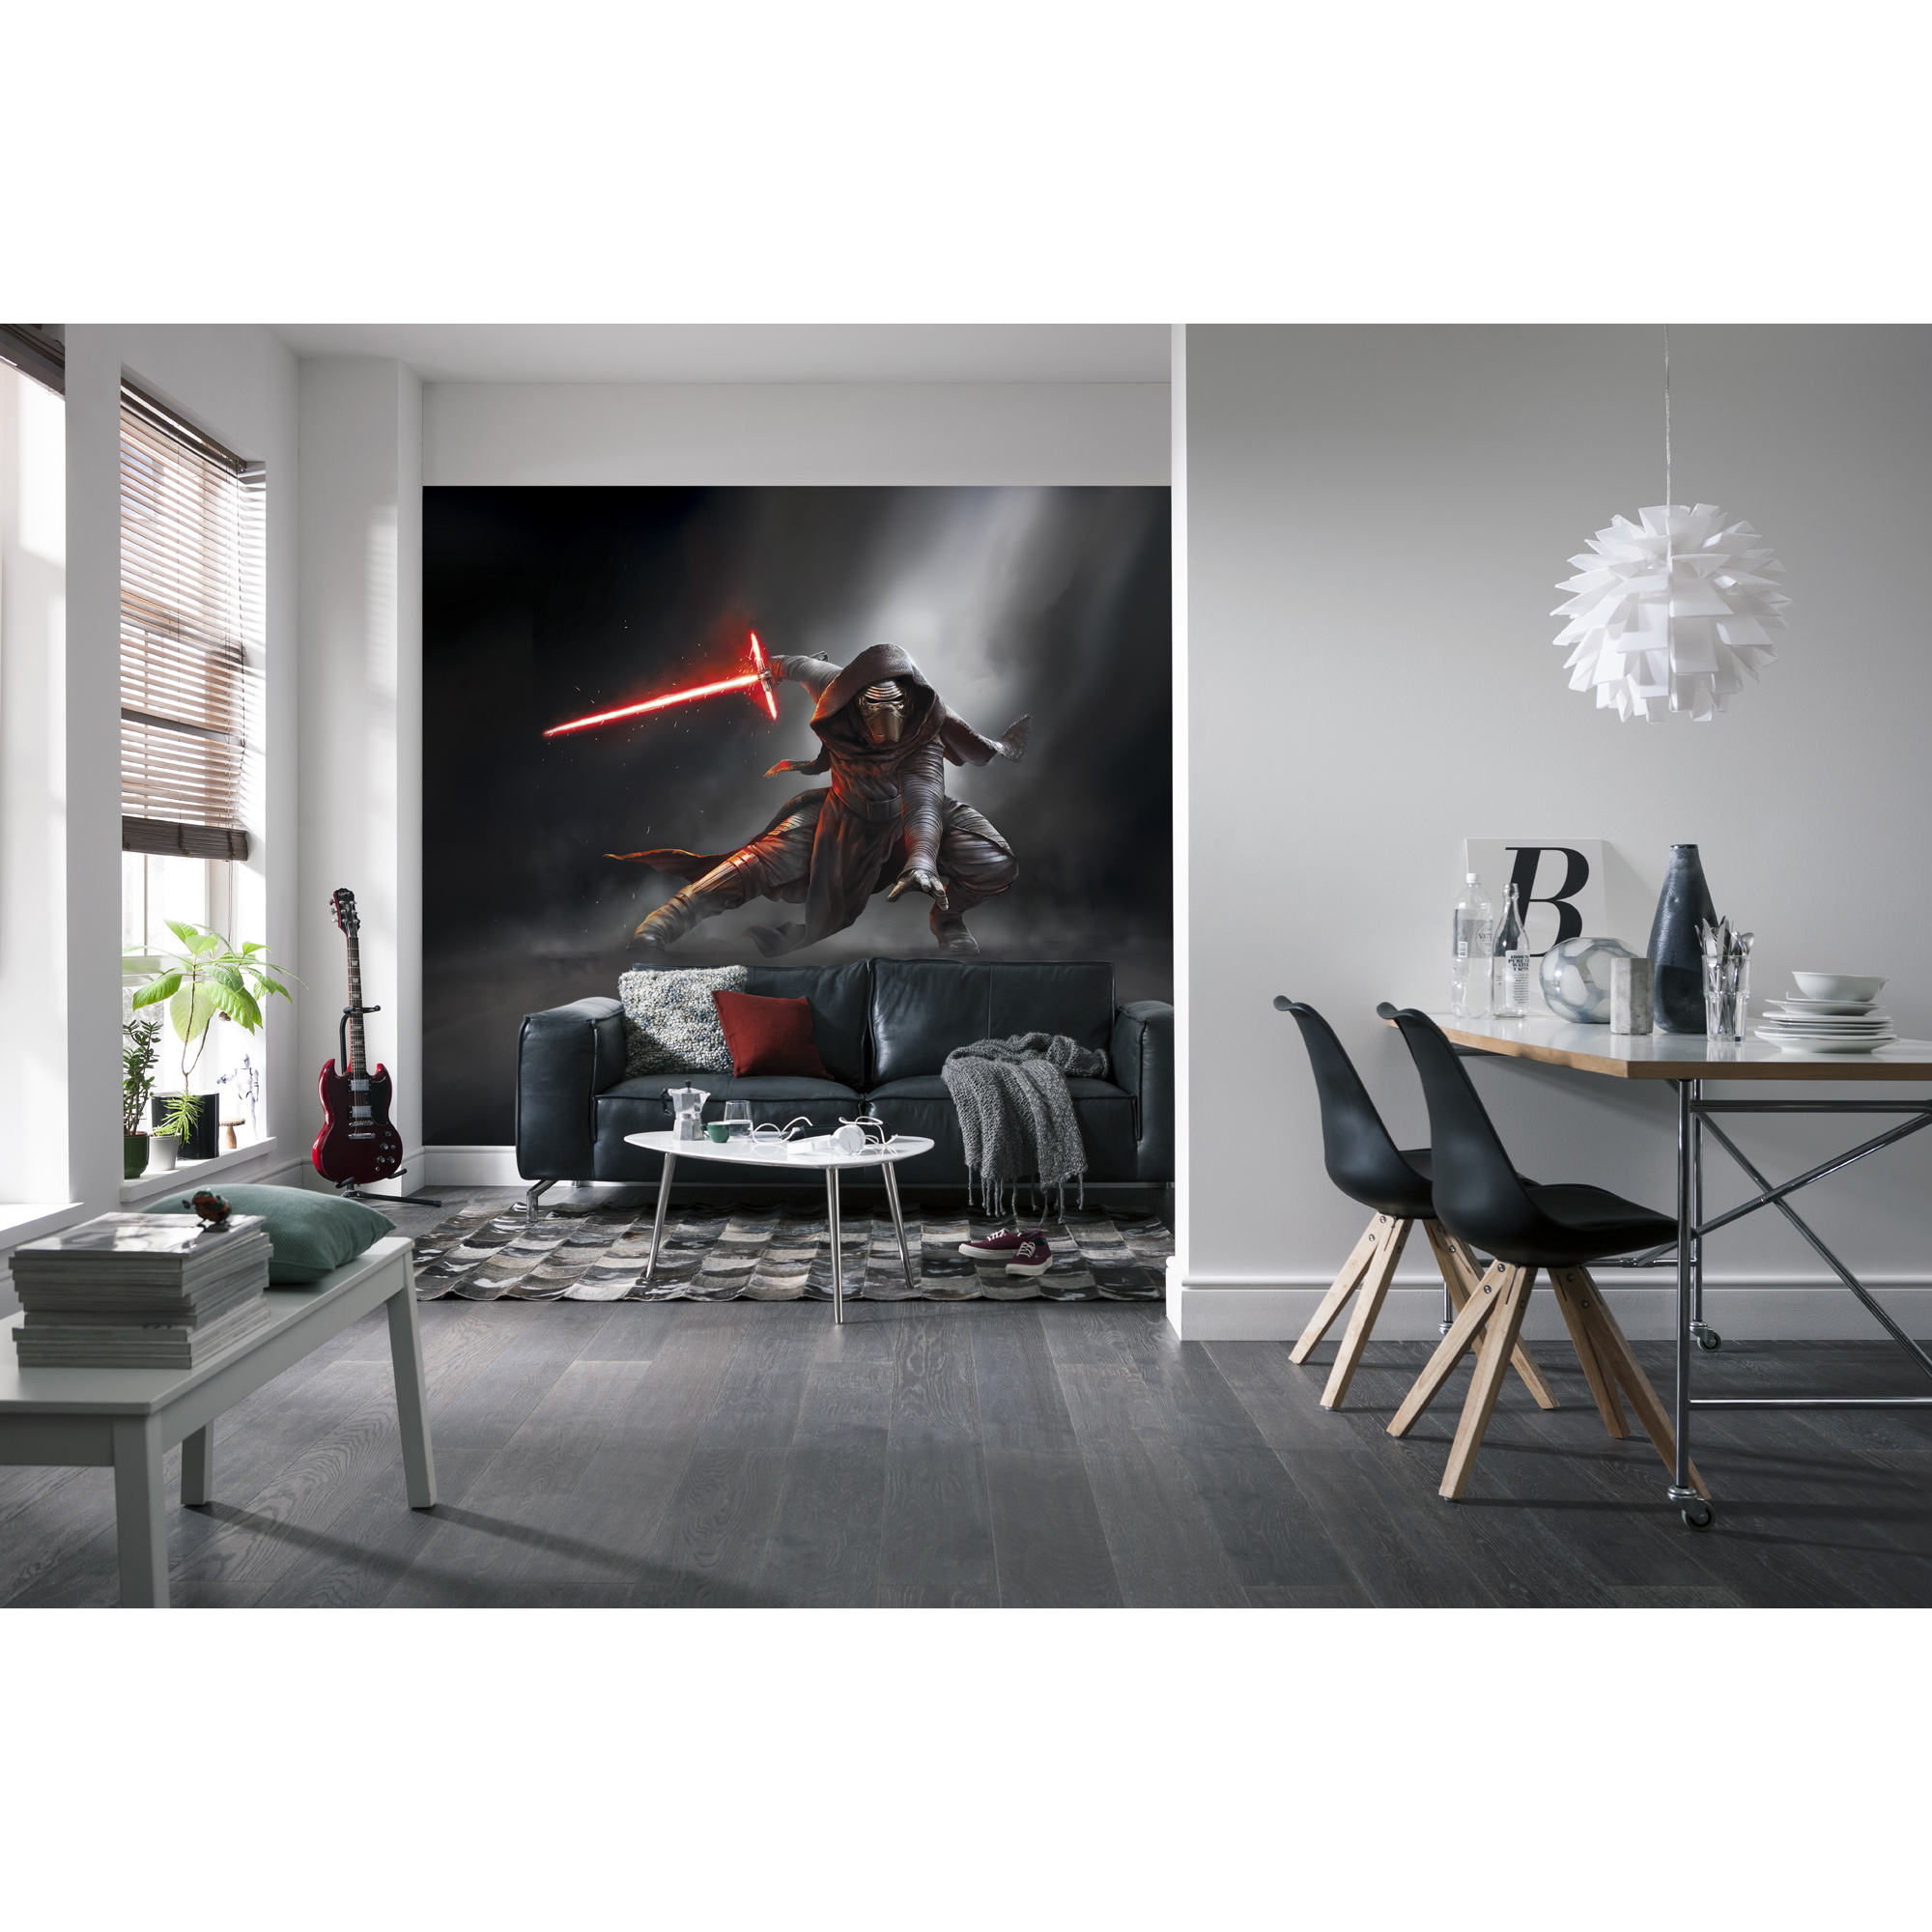 Fototapete 'Star Wars Kylo Ren' 368 x 254 cm + product picture